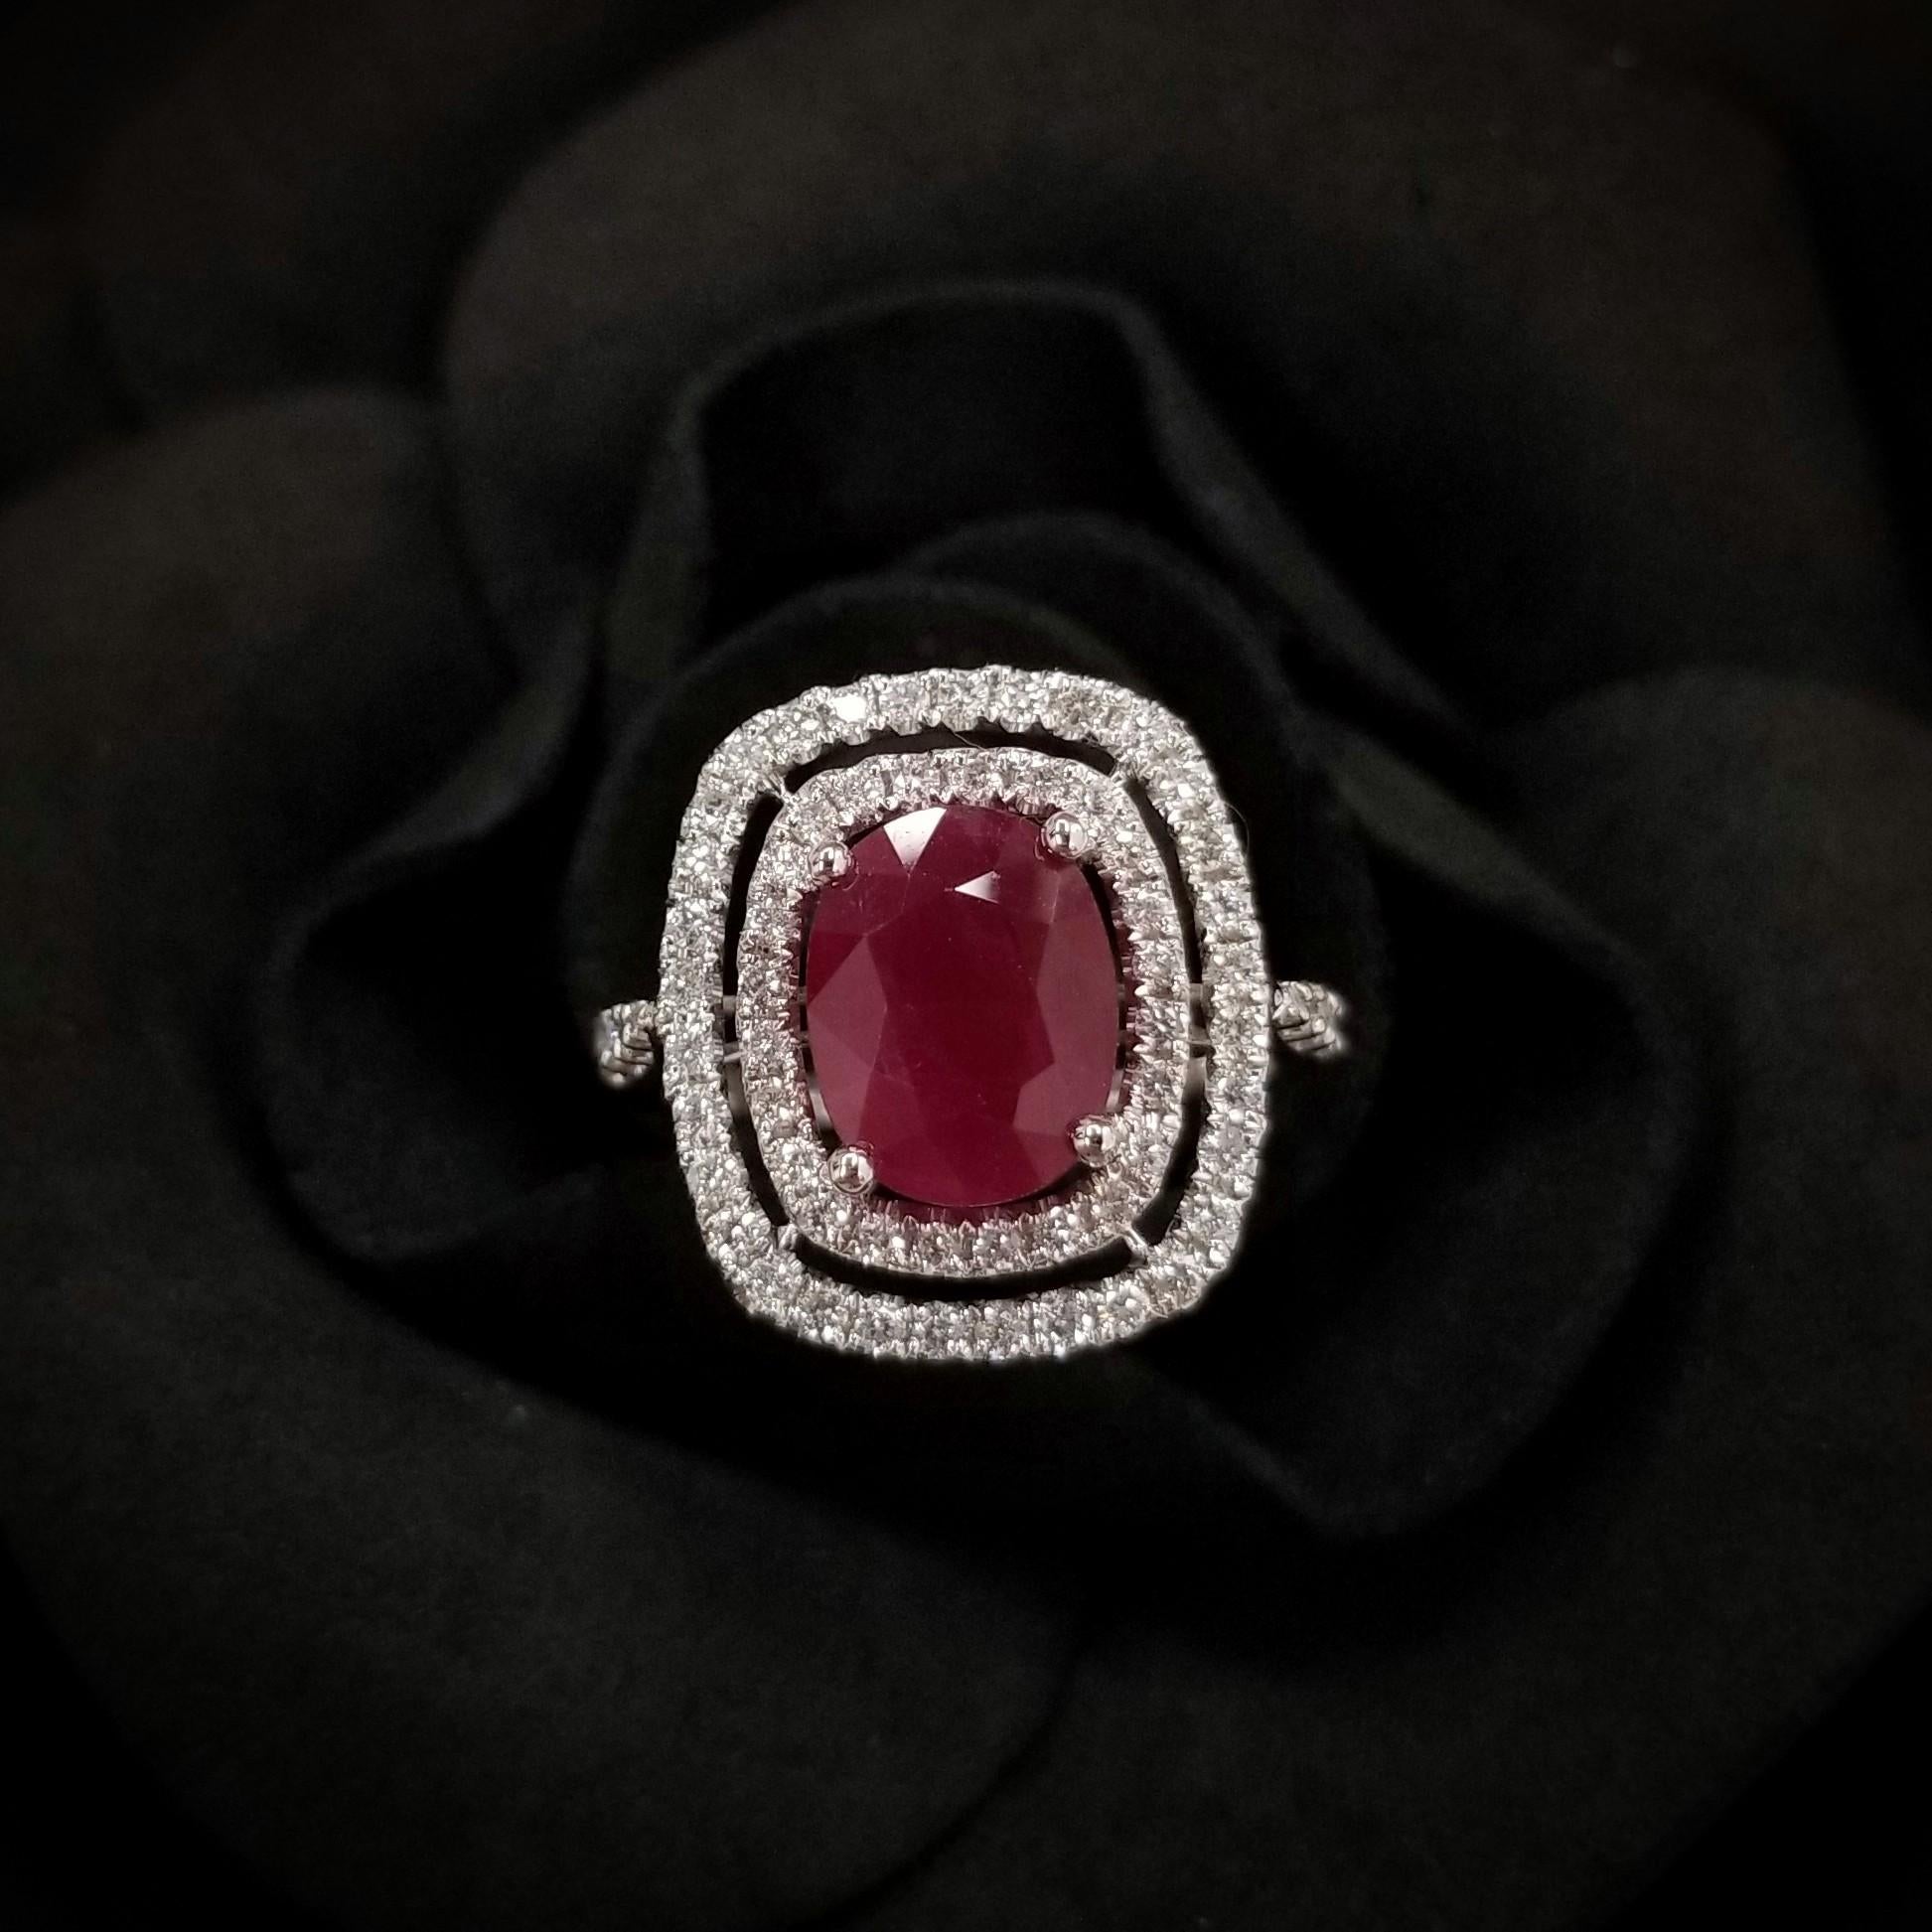 Women's IGI Certified 3.05Carat Ruby & Diamond Ring in 18K White Gold For Sale